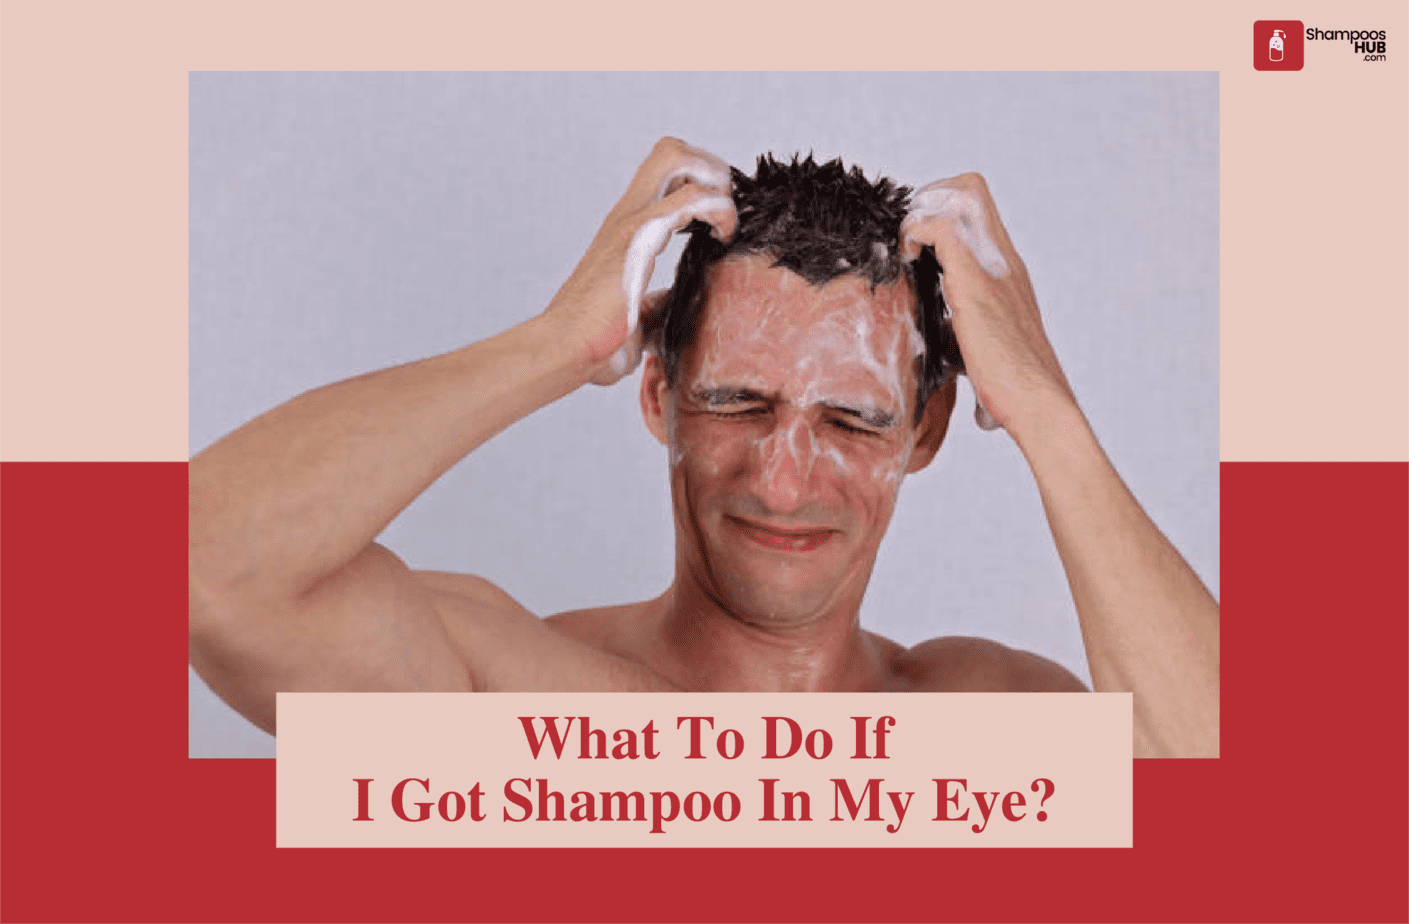 What To Do If I Got Shampoo In My Eye?